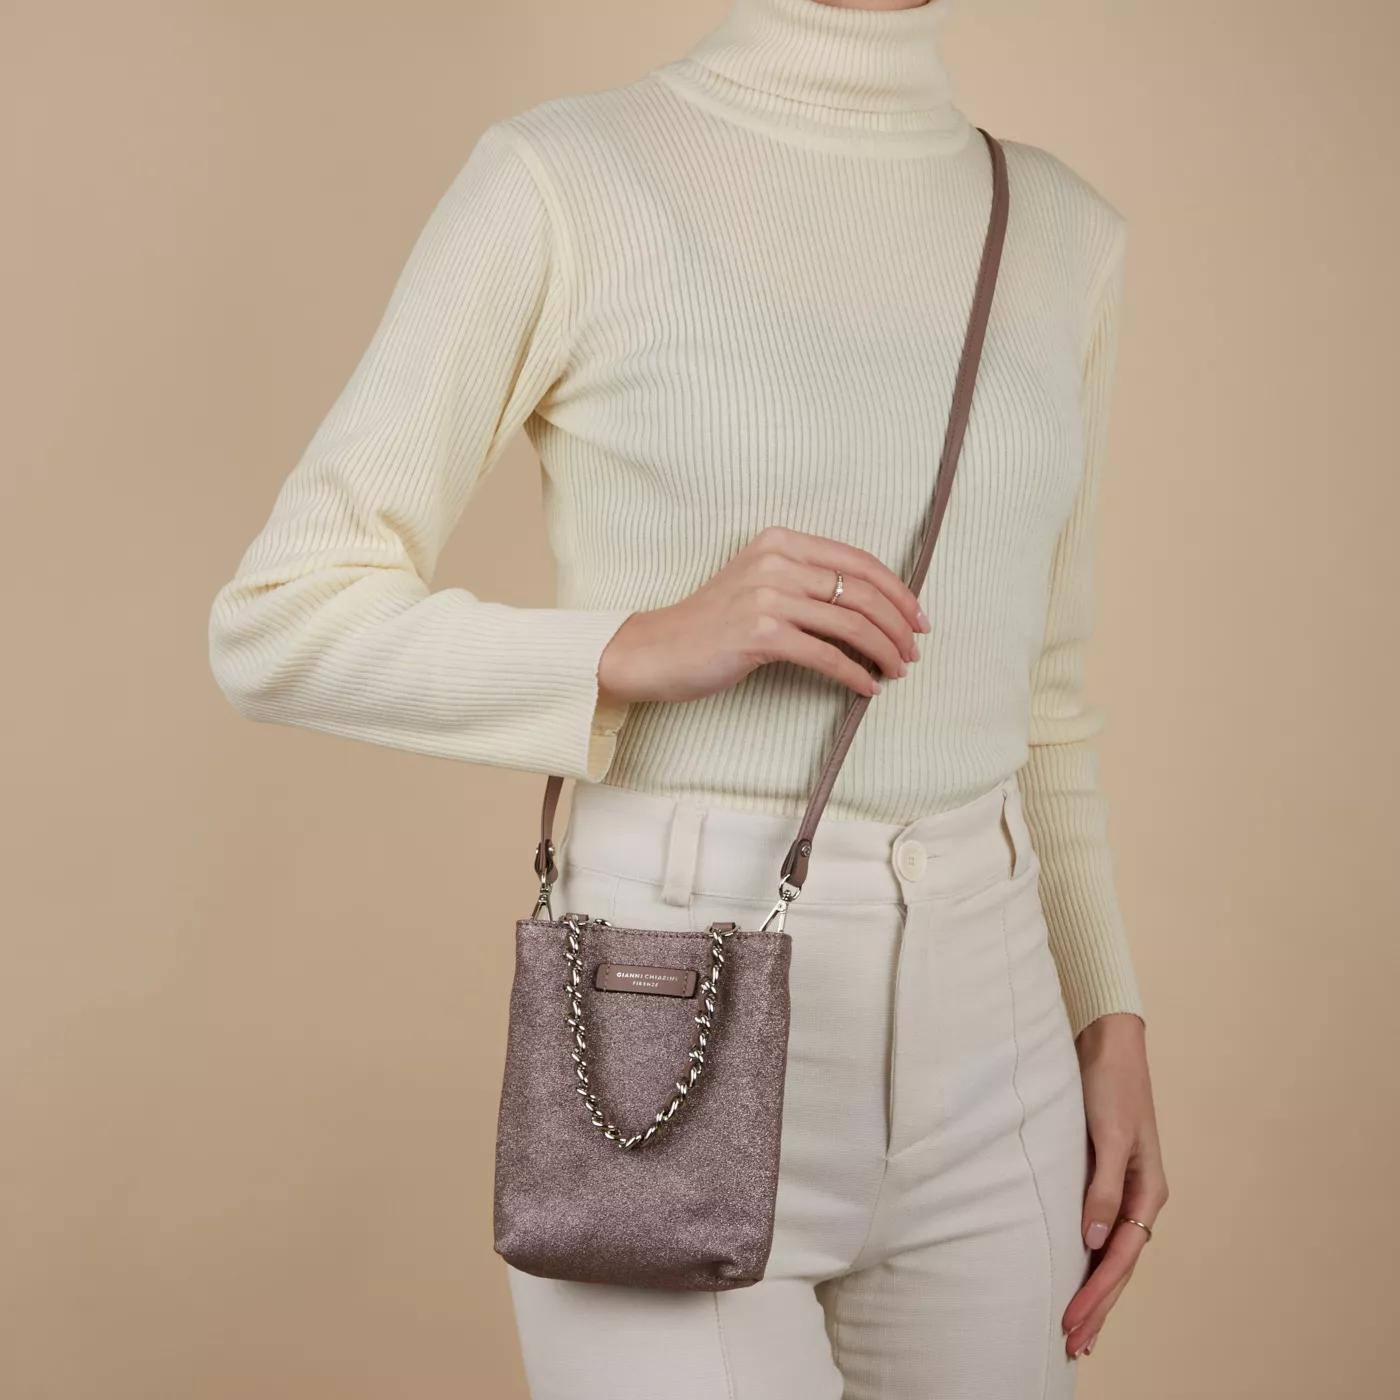 Gianni Chiarini Crossbody bags damen Handtasche Violett BS-9590 2 in taupe